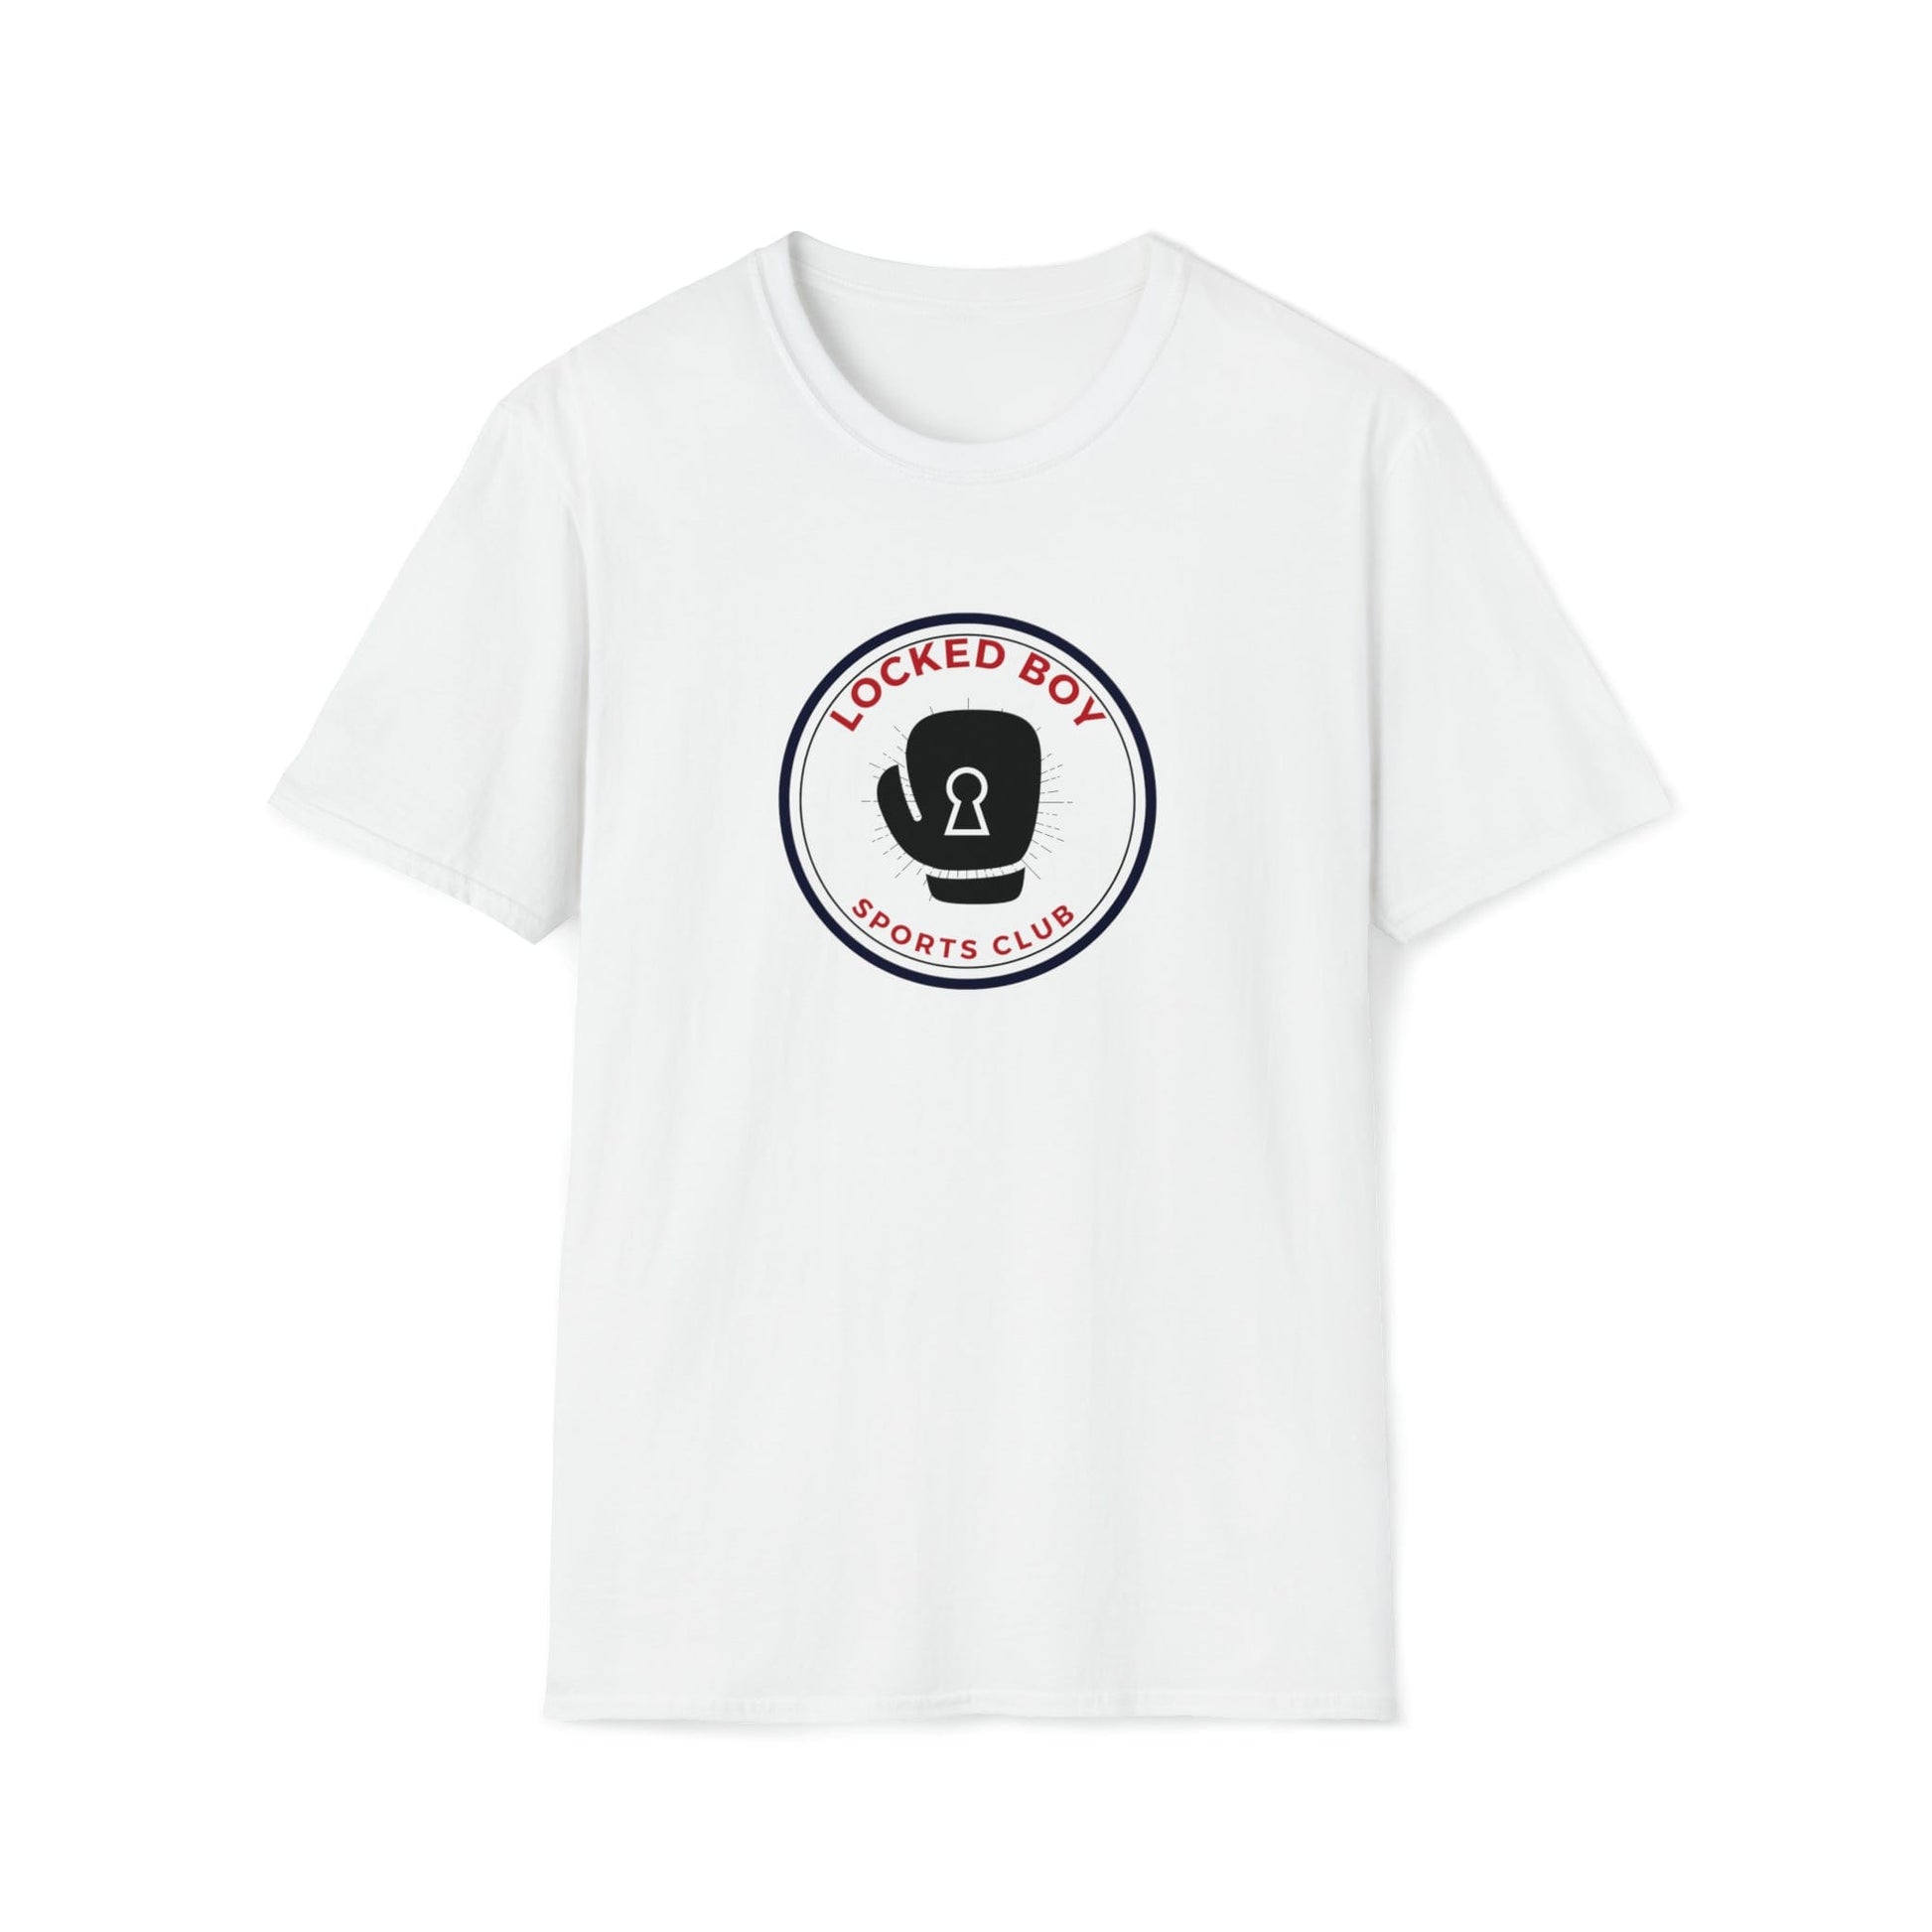 T-Shirt White / S LockedBoy Sports Club - Chastity Tshirt Boxing Glove LEATHERDADDY BATOR